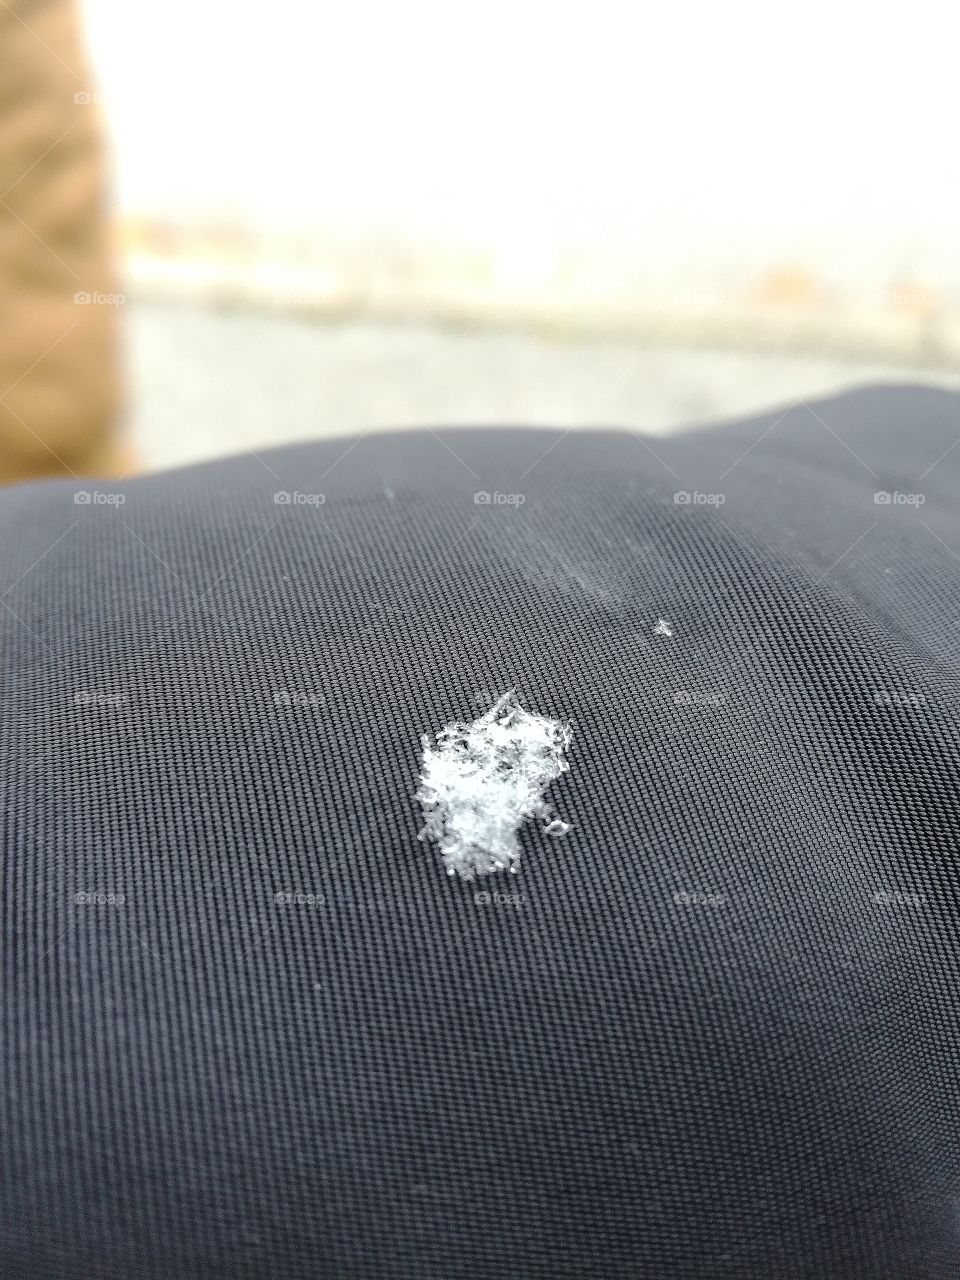 snow on my jacket